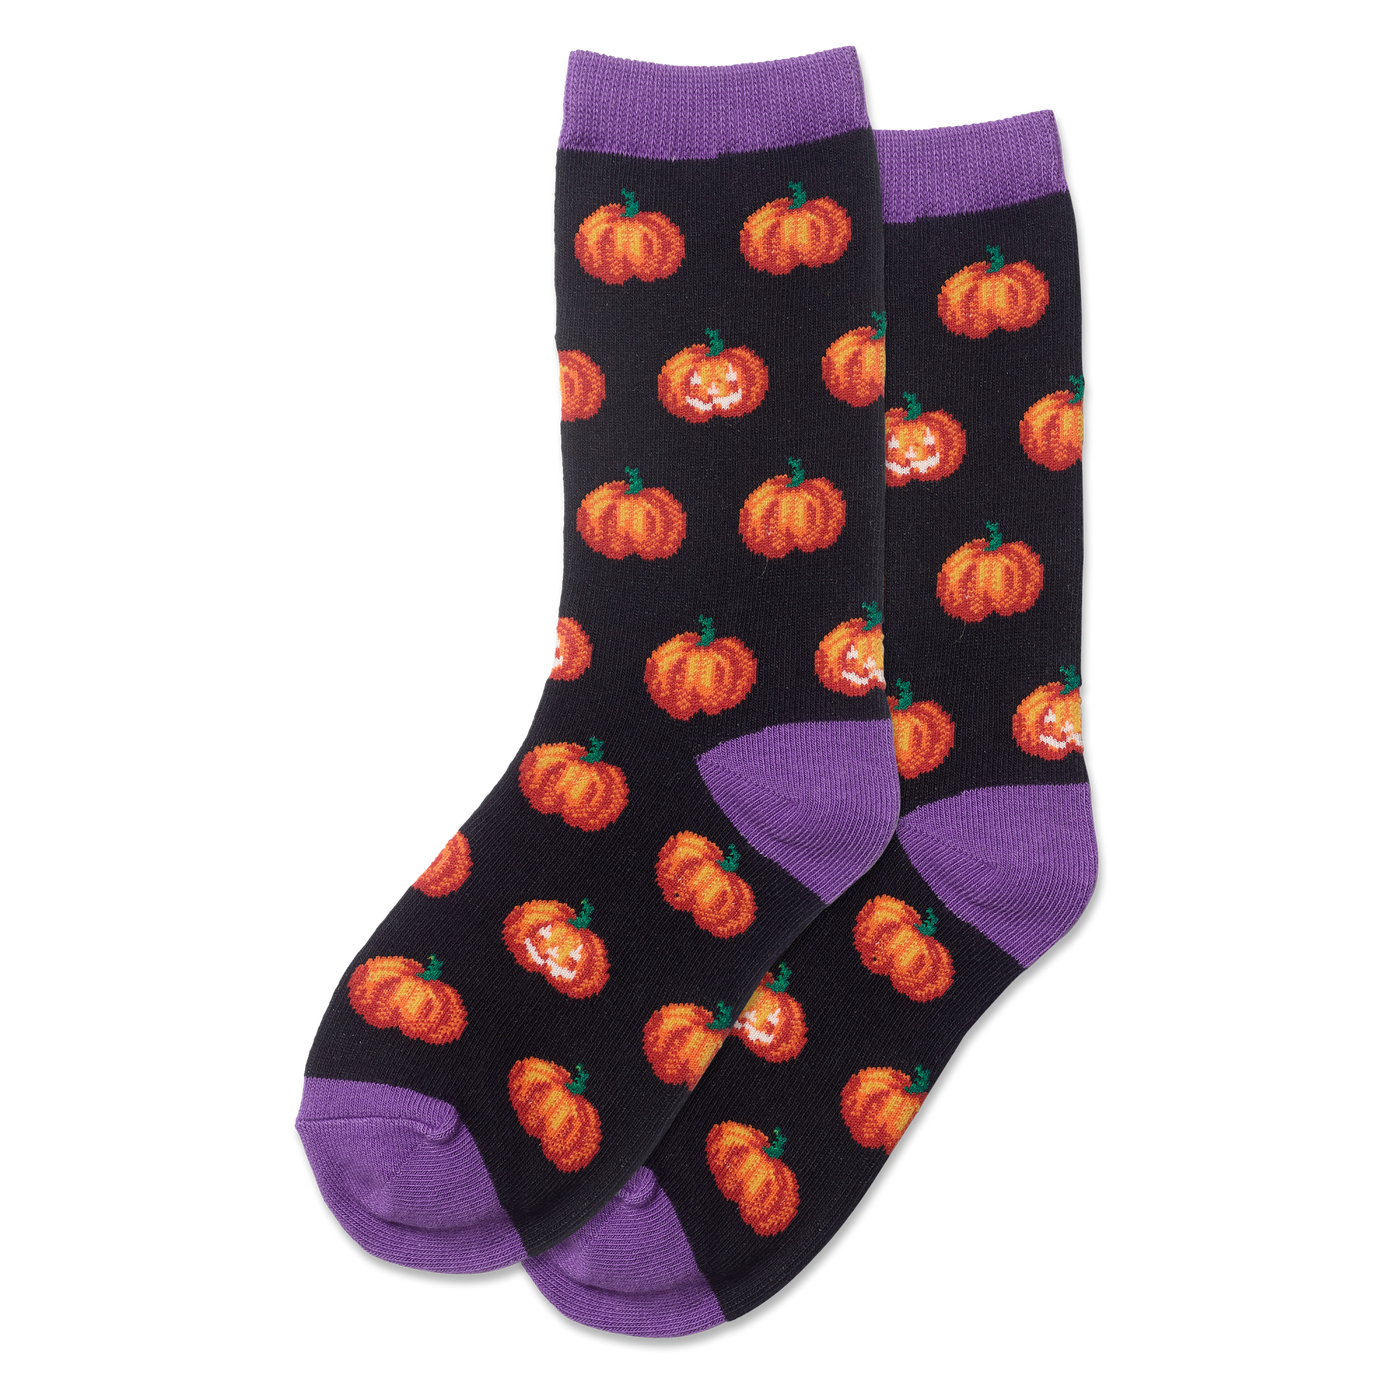 Kids "Glow In the Dark Pumpkins" Crew Socks by Hot Sox